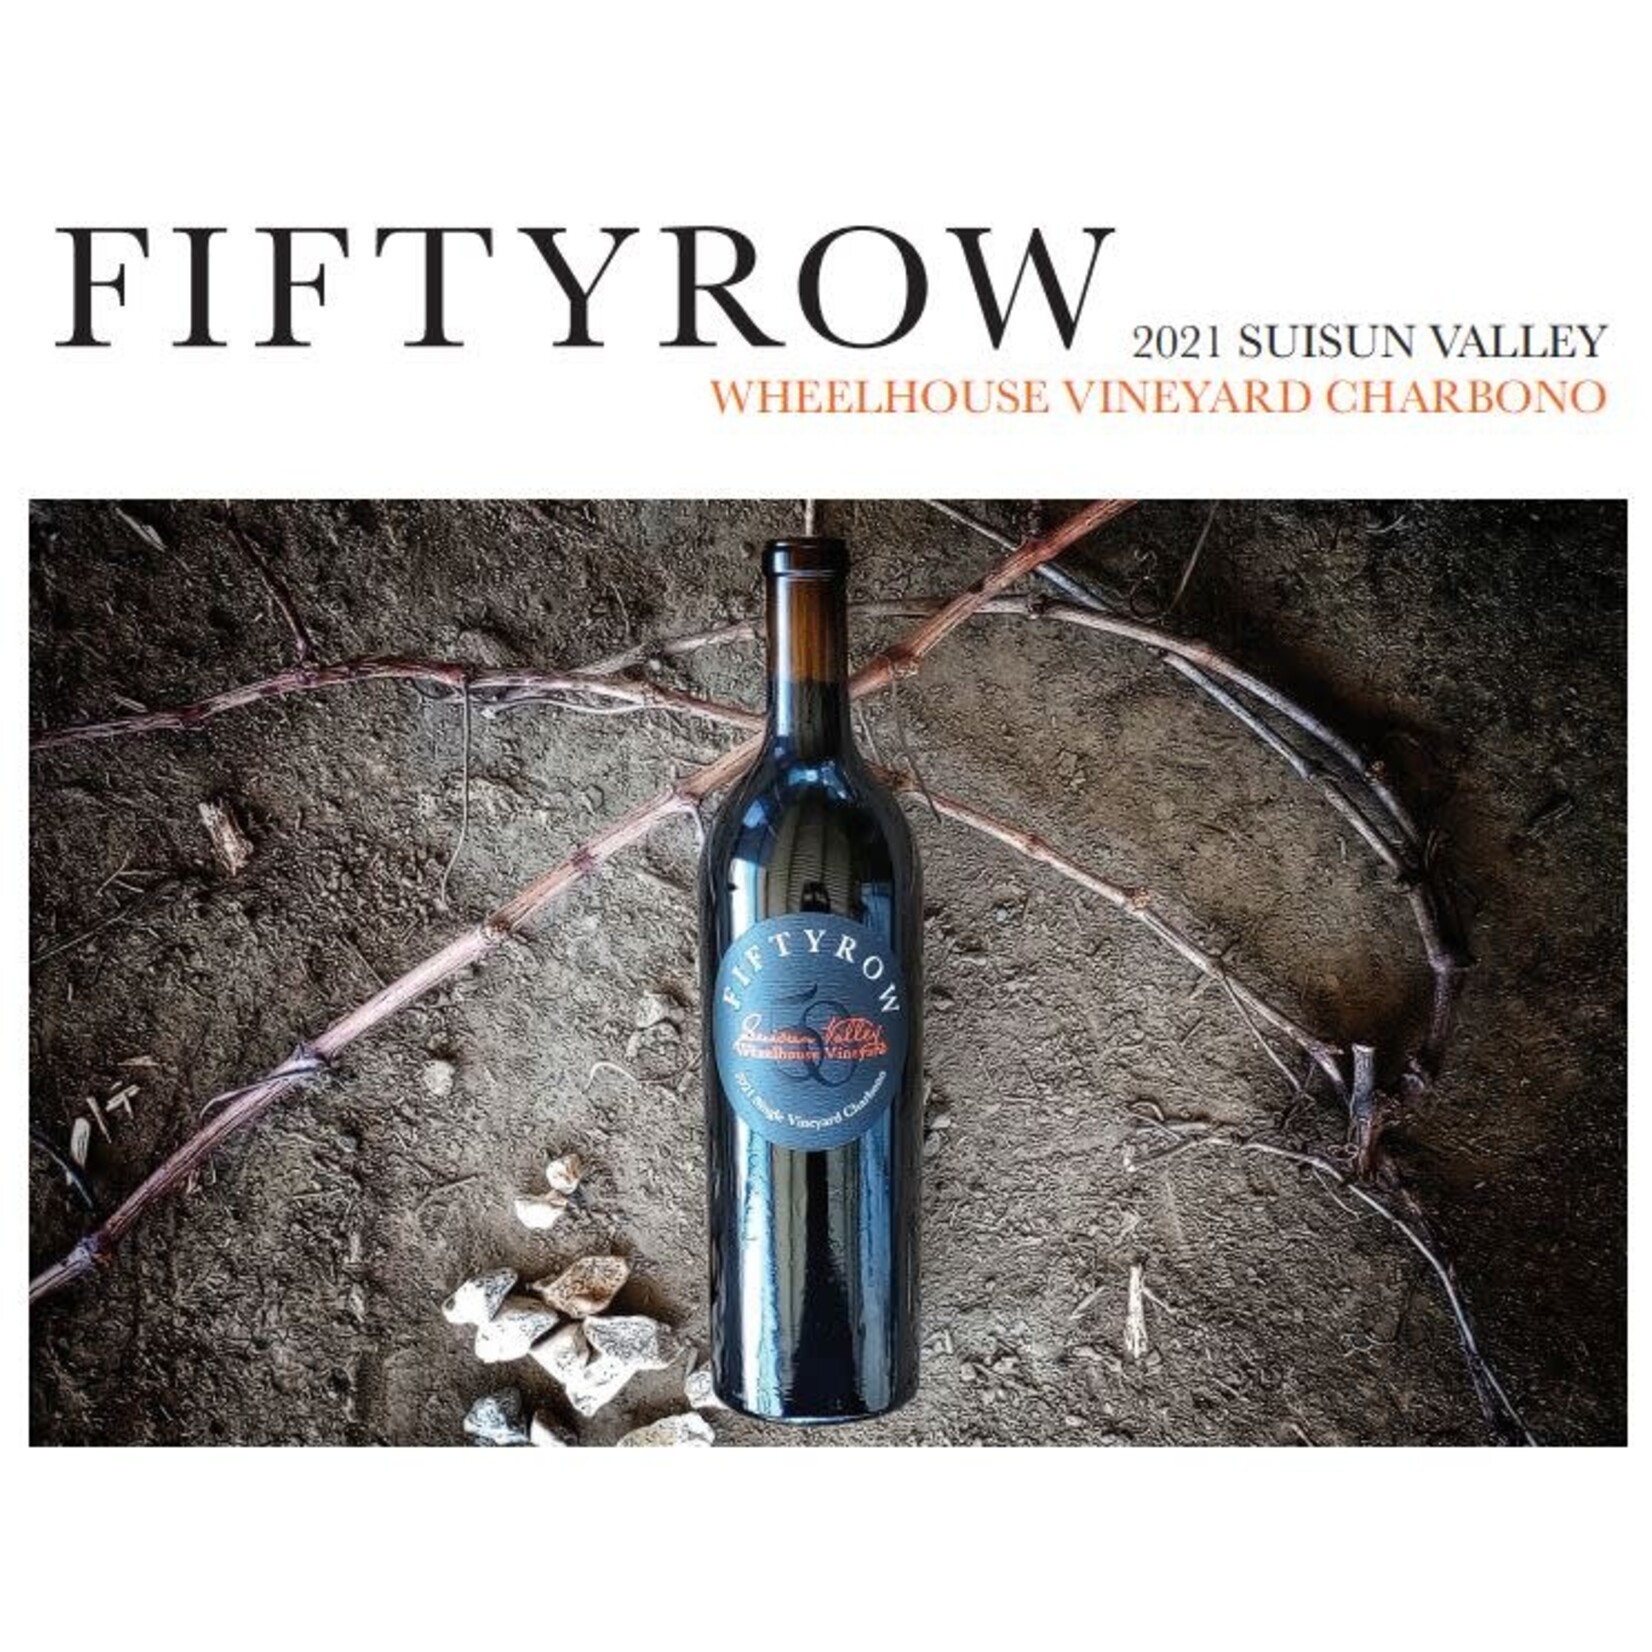 Wheelhouse Vineyards Fiftyrow Single Vineyard 2021 Charbono Suisun Valley California